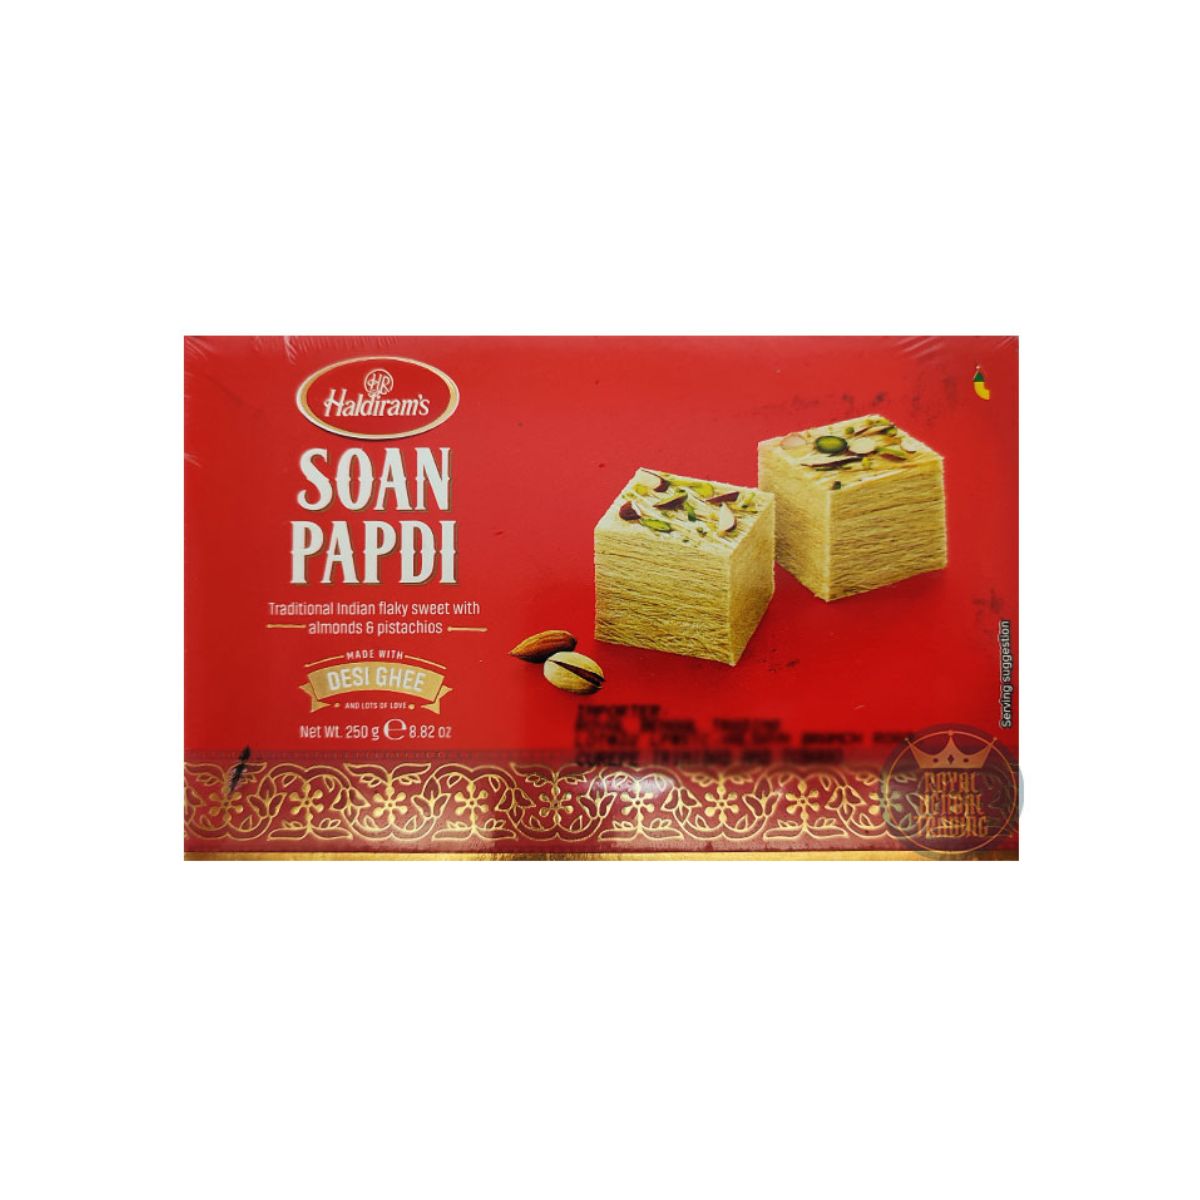 Haldiram's Soan Papdi - Traditional Indian Flaky Sweet With Almonds & Pistachios - 250g